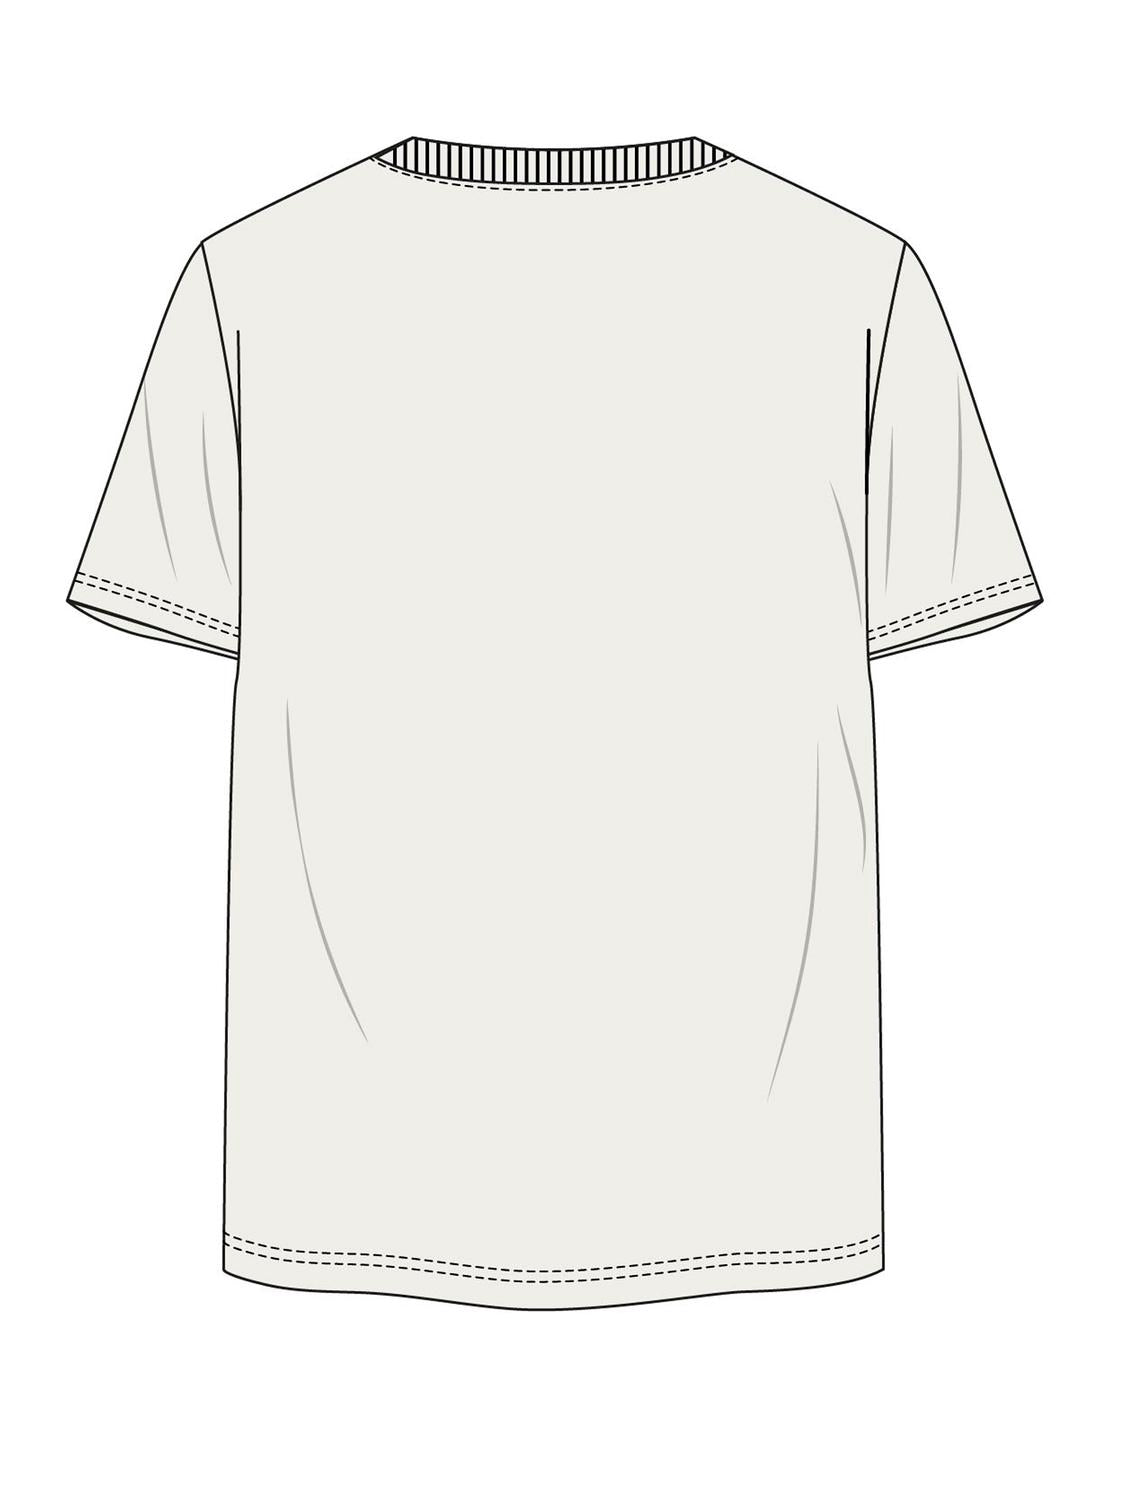 Camiseta blanca estampada - JCODRAGON